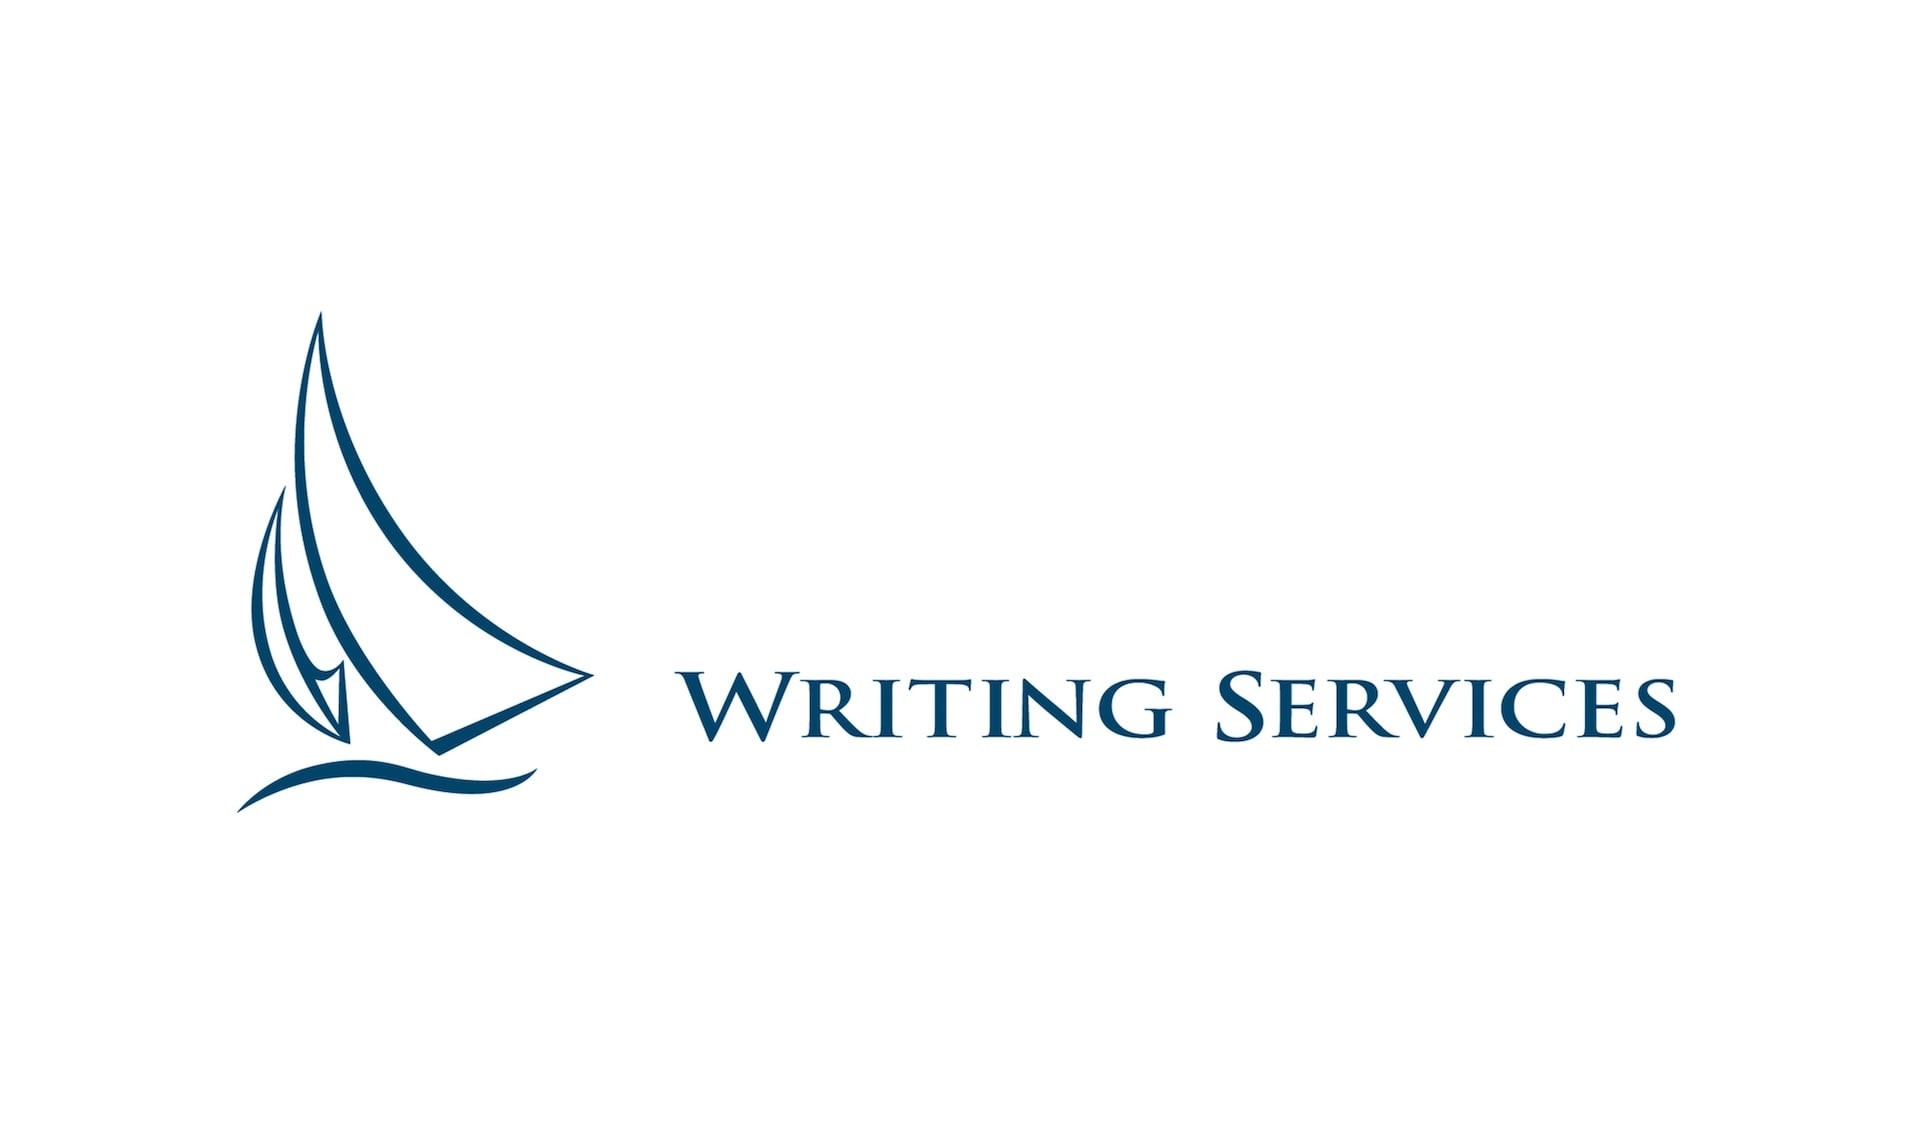 Writing Services logo